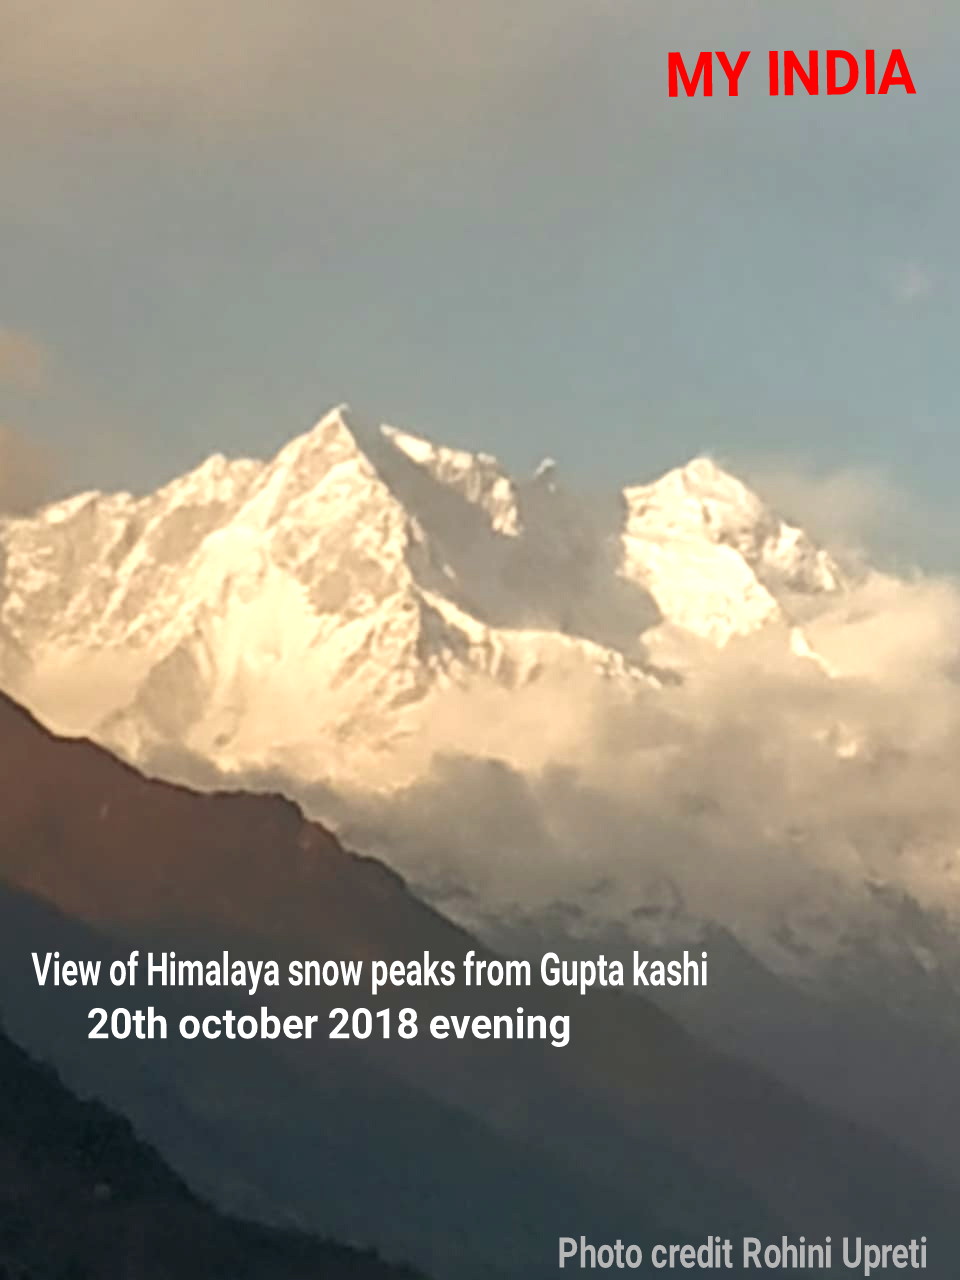 Himalayas, the abode of God